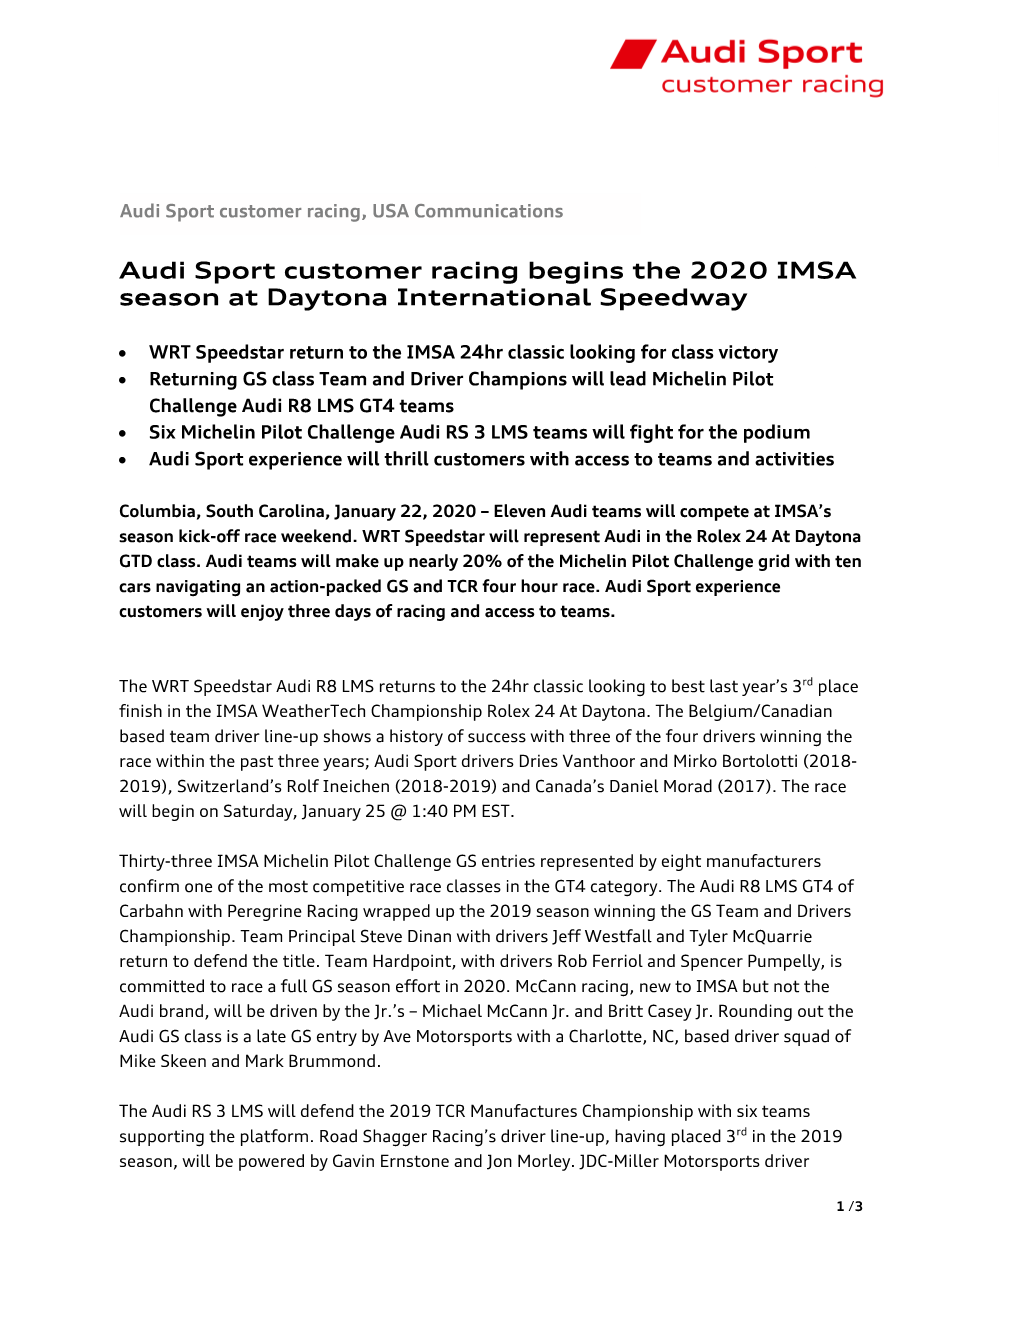 Audi Sport Customer Racing Begins the 2020 IMSA Season at Daytona International Speedway